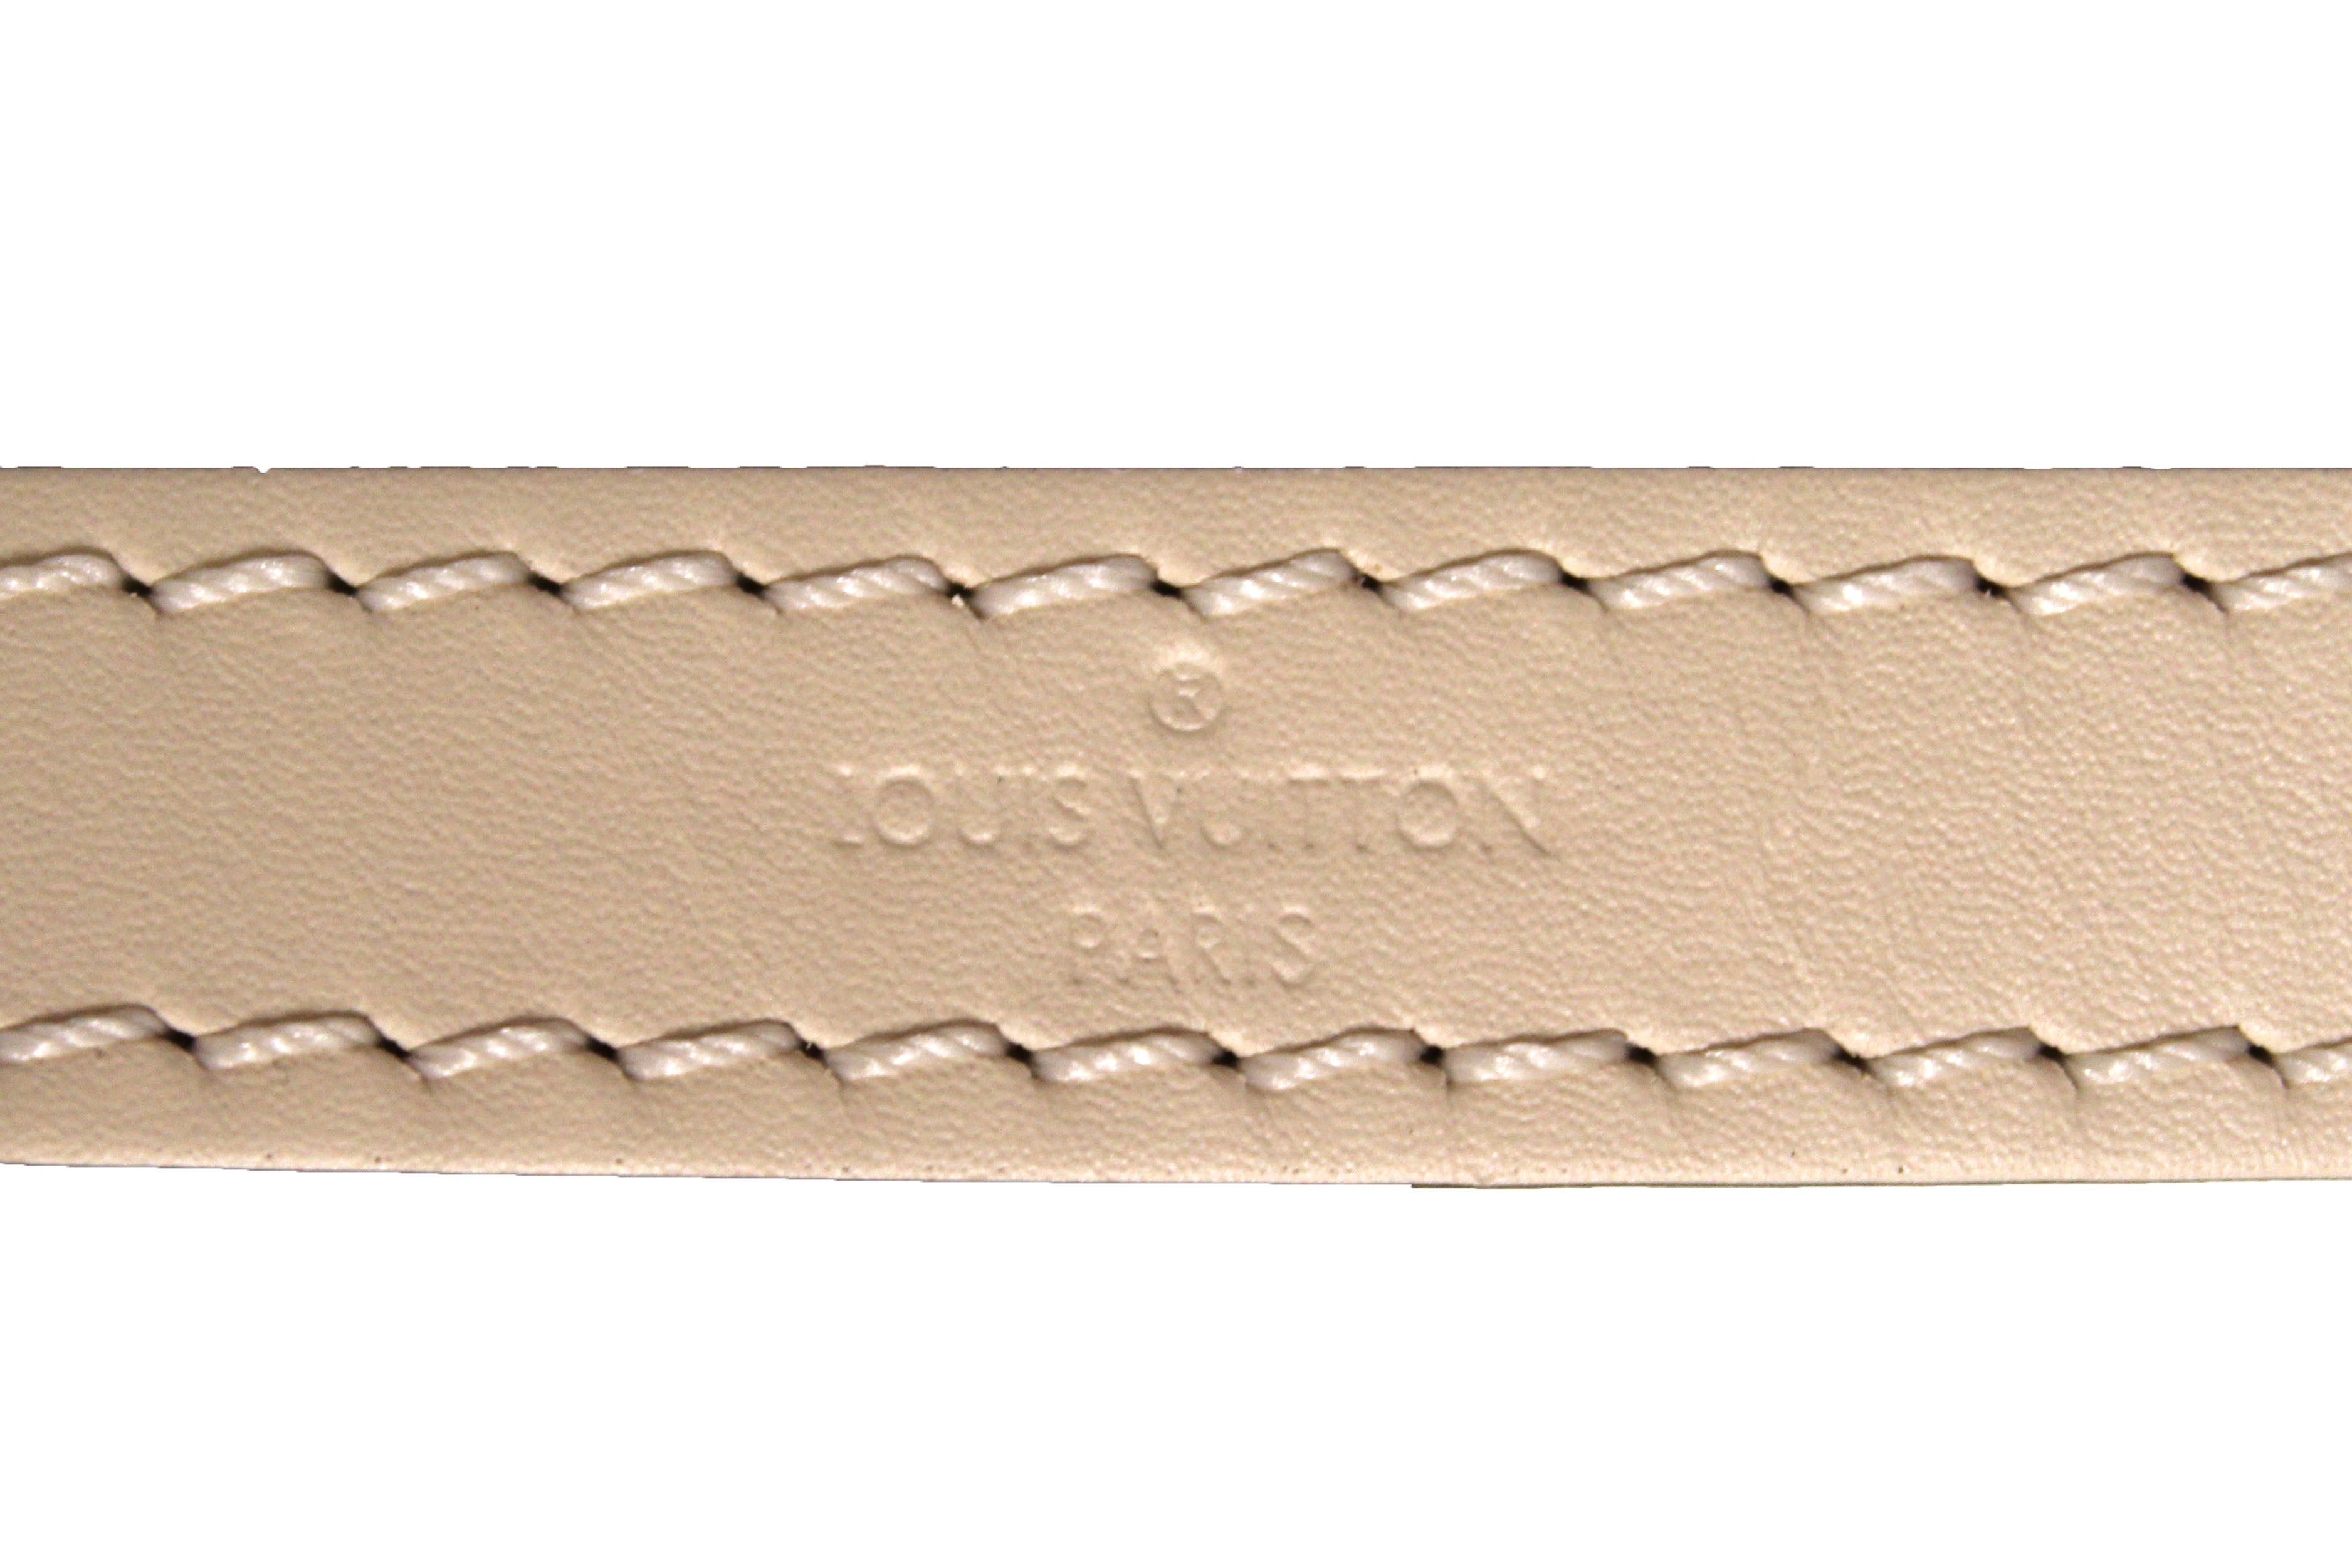 Date Code & Stamp] Louis Vuitton Neonoe Braided Handle Damier Azur Canvas